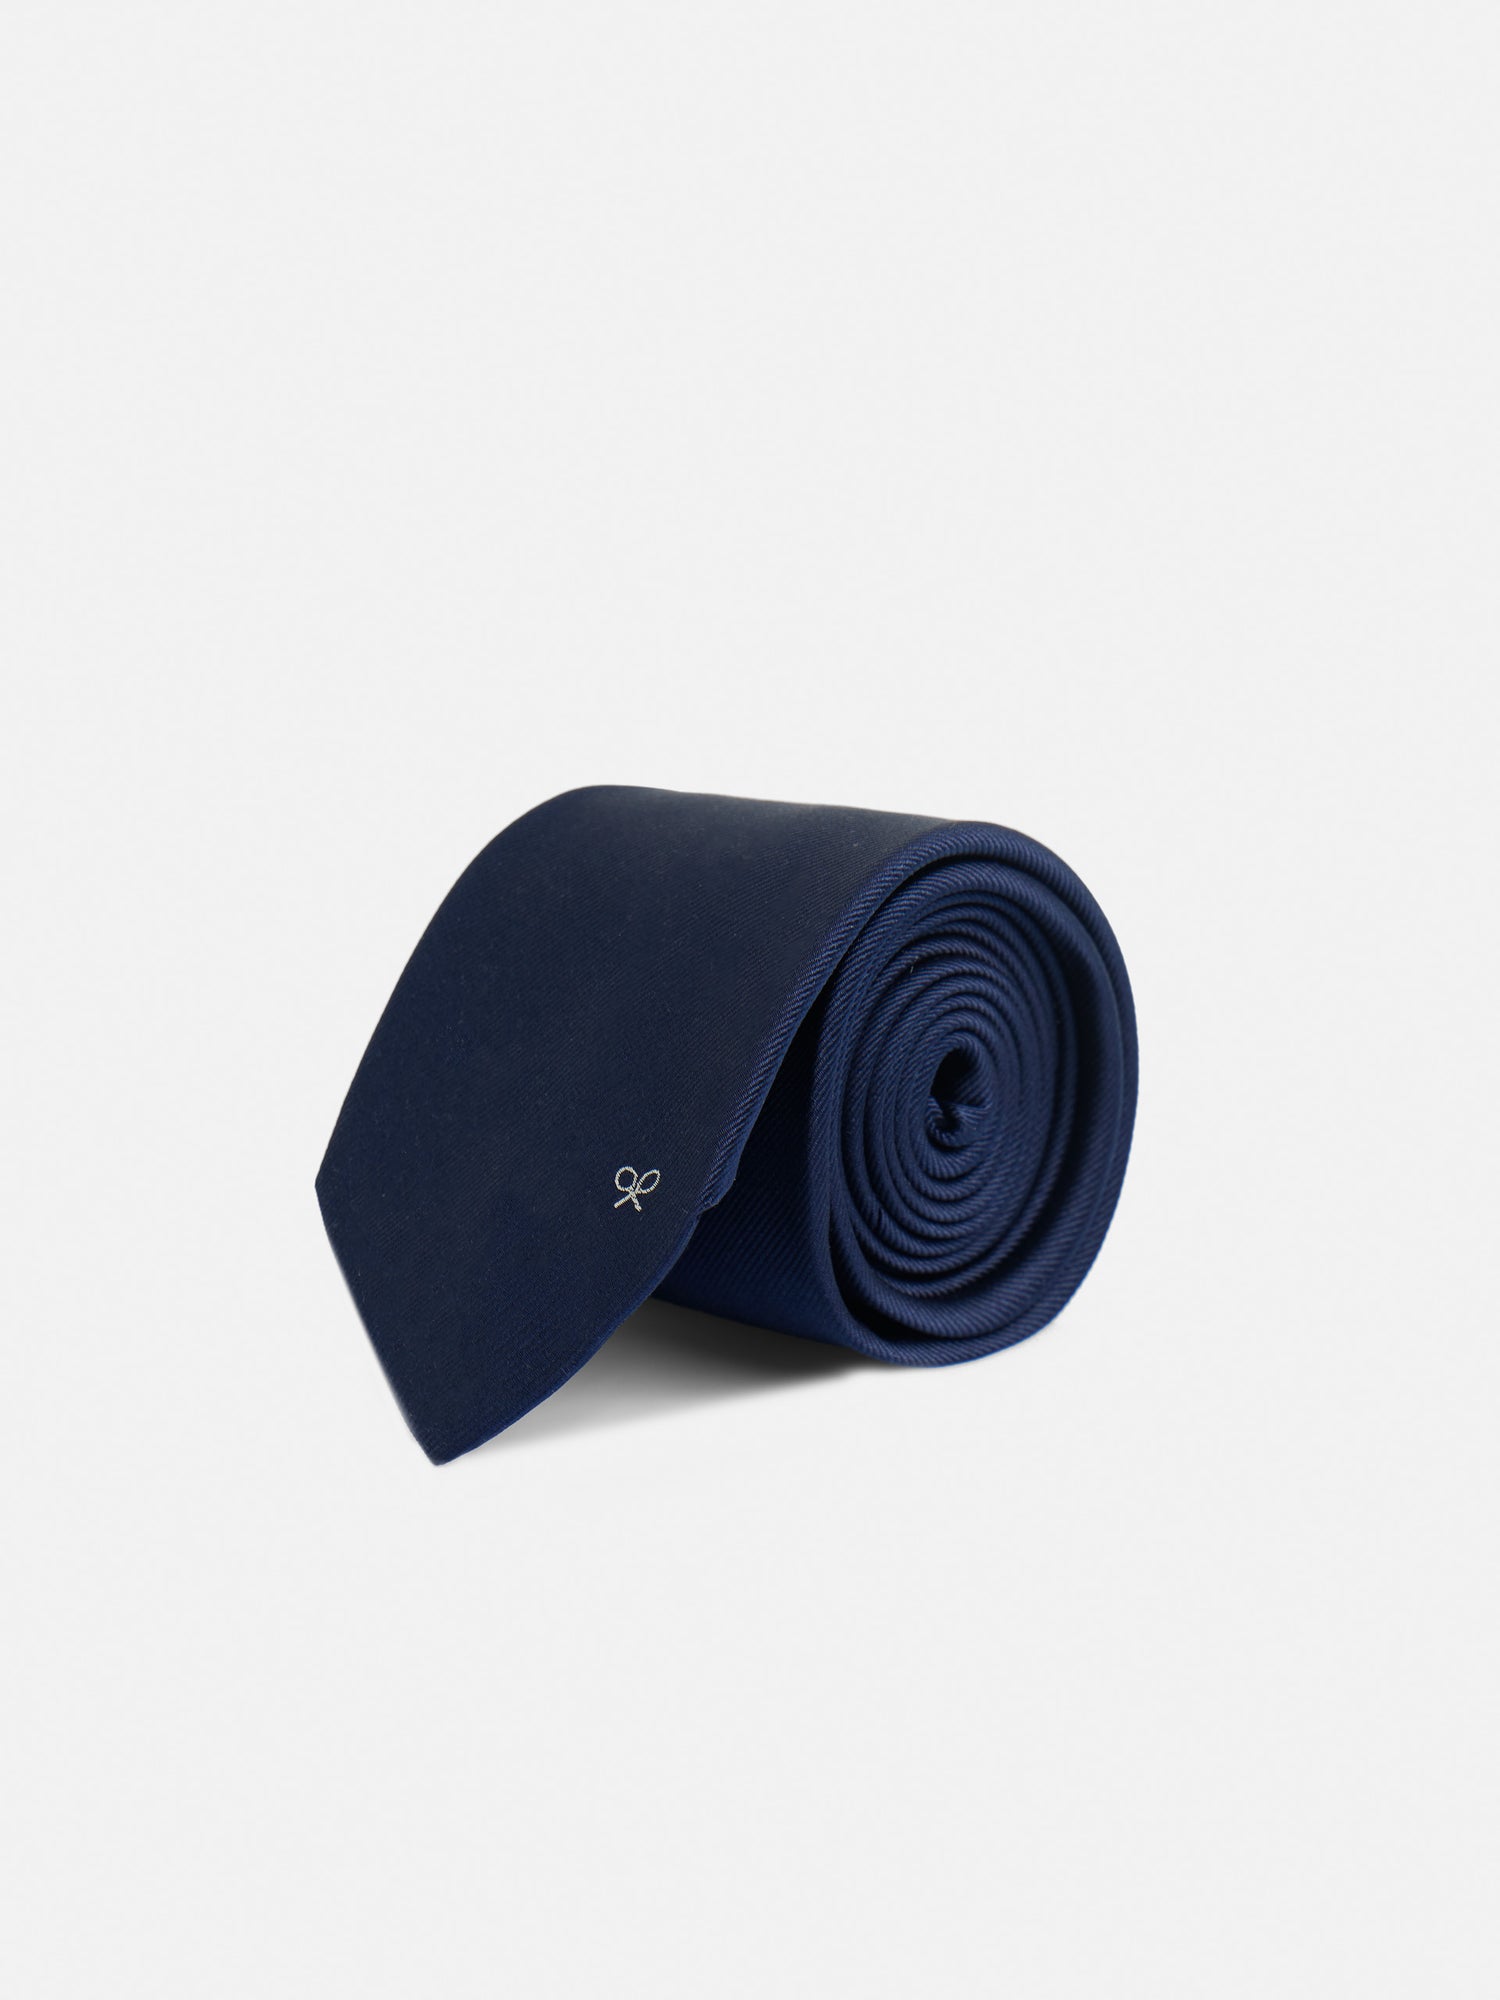 Plain navy blue silbon tie